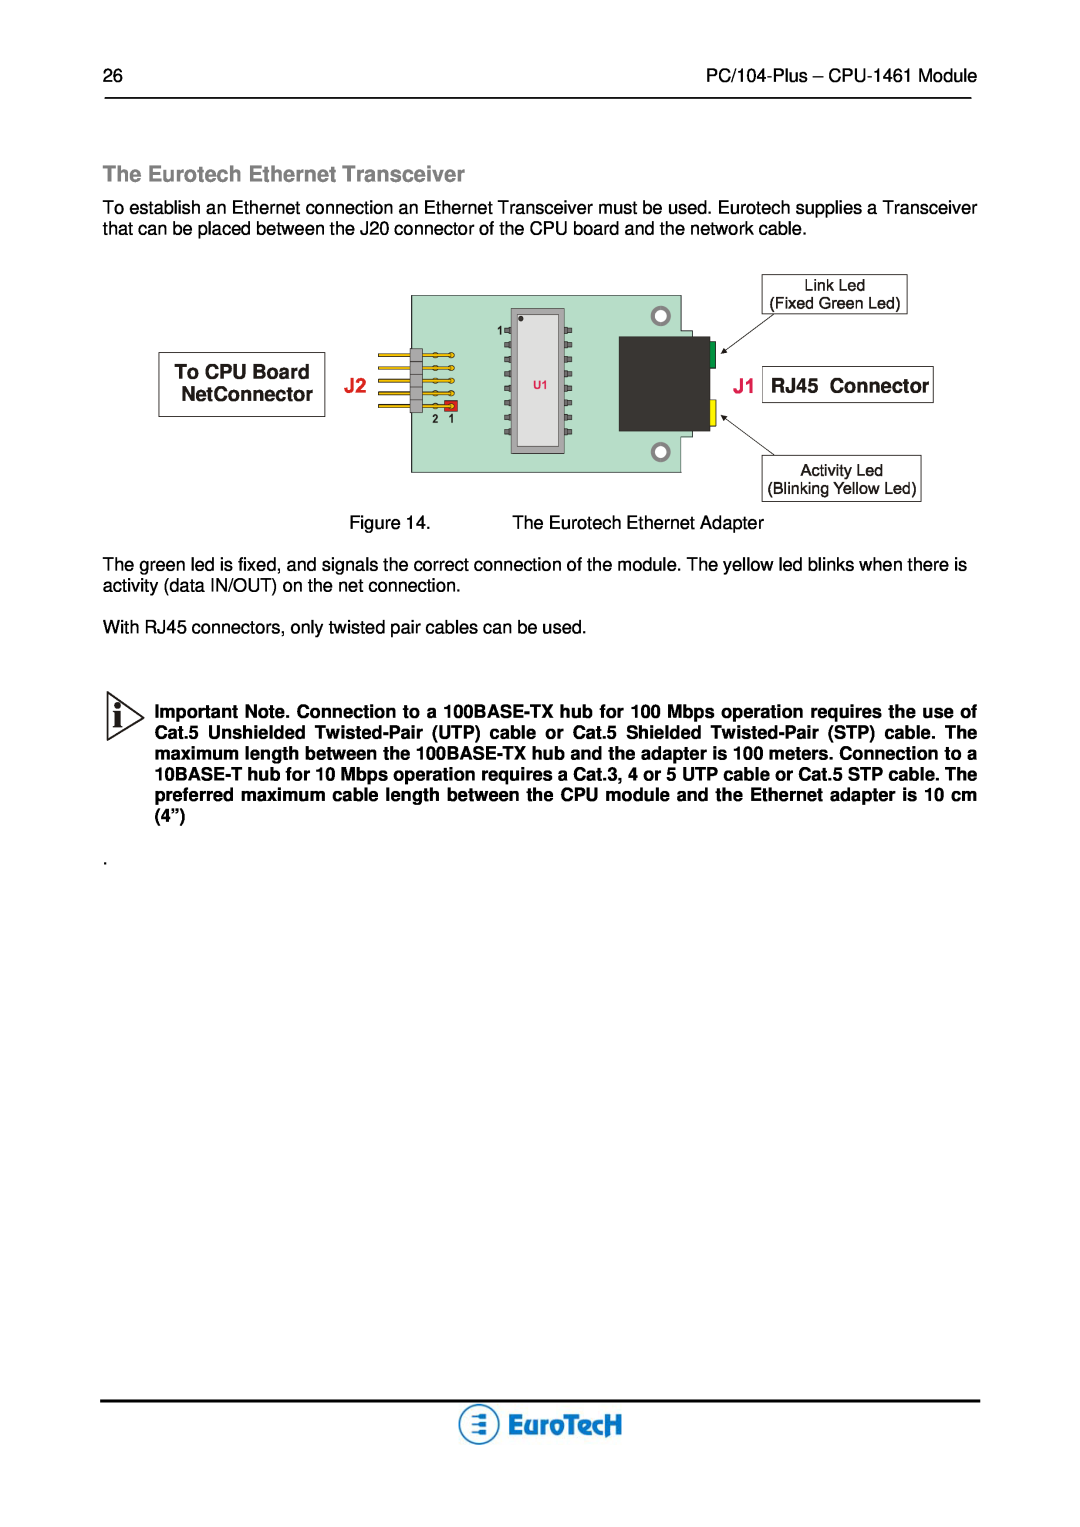 Eurotech Appliances CPU-1461 user manual The Eurotech Ethernet Transceiver, To CPU Board NetConnector, RJ45 Connector 